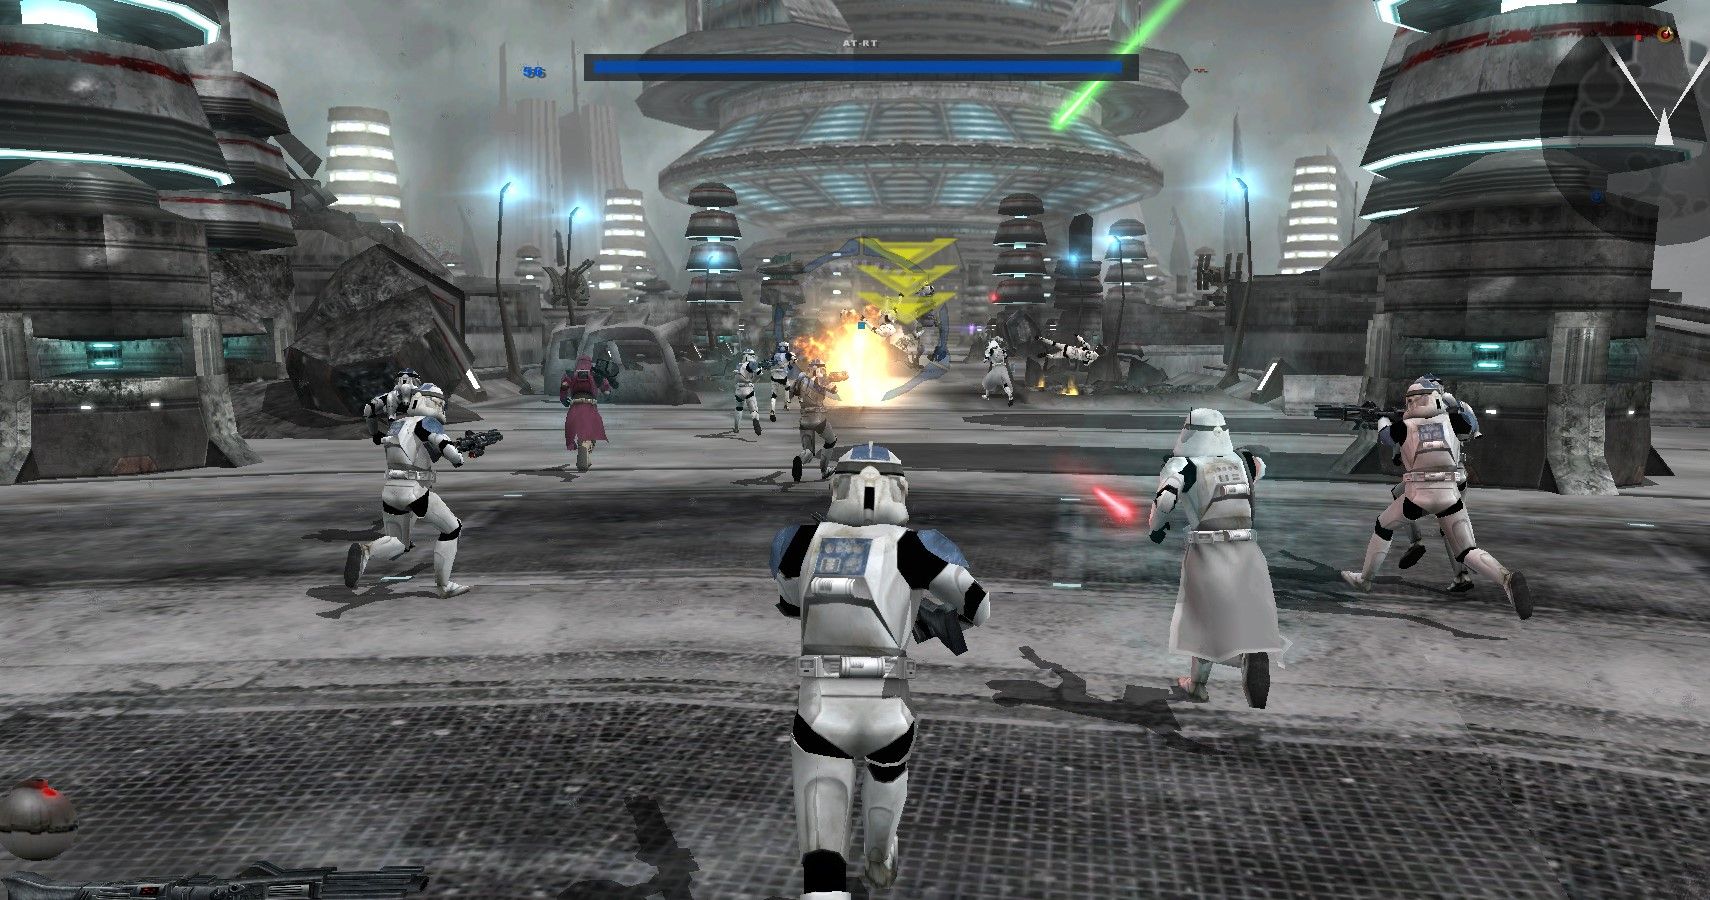 star wars battlefront 2 classic mods on steam